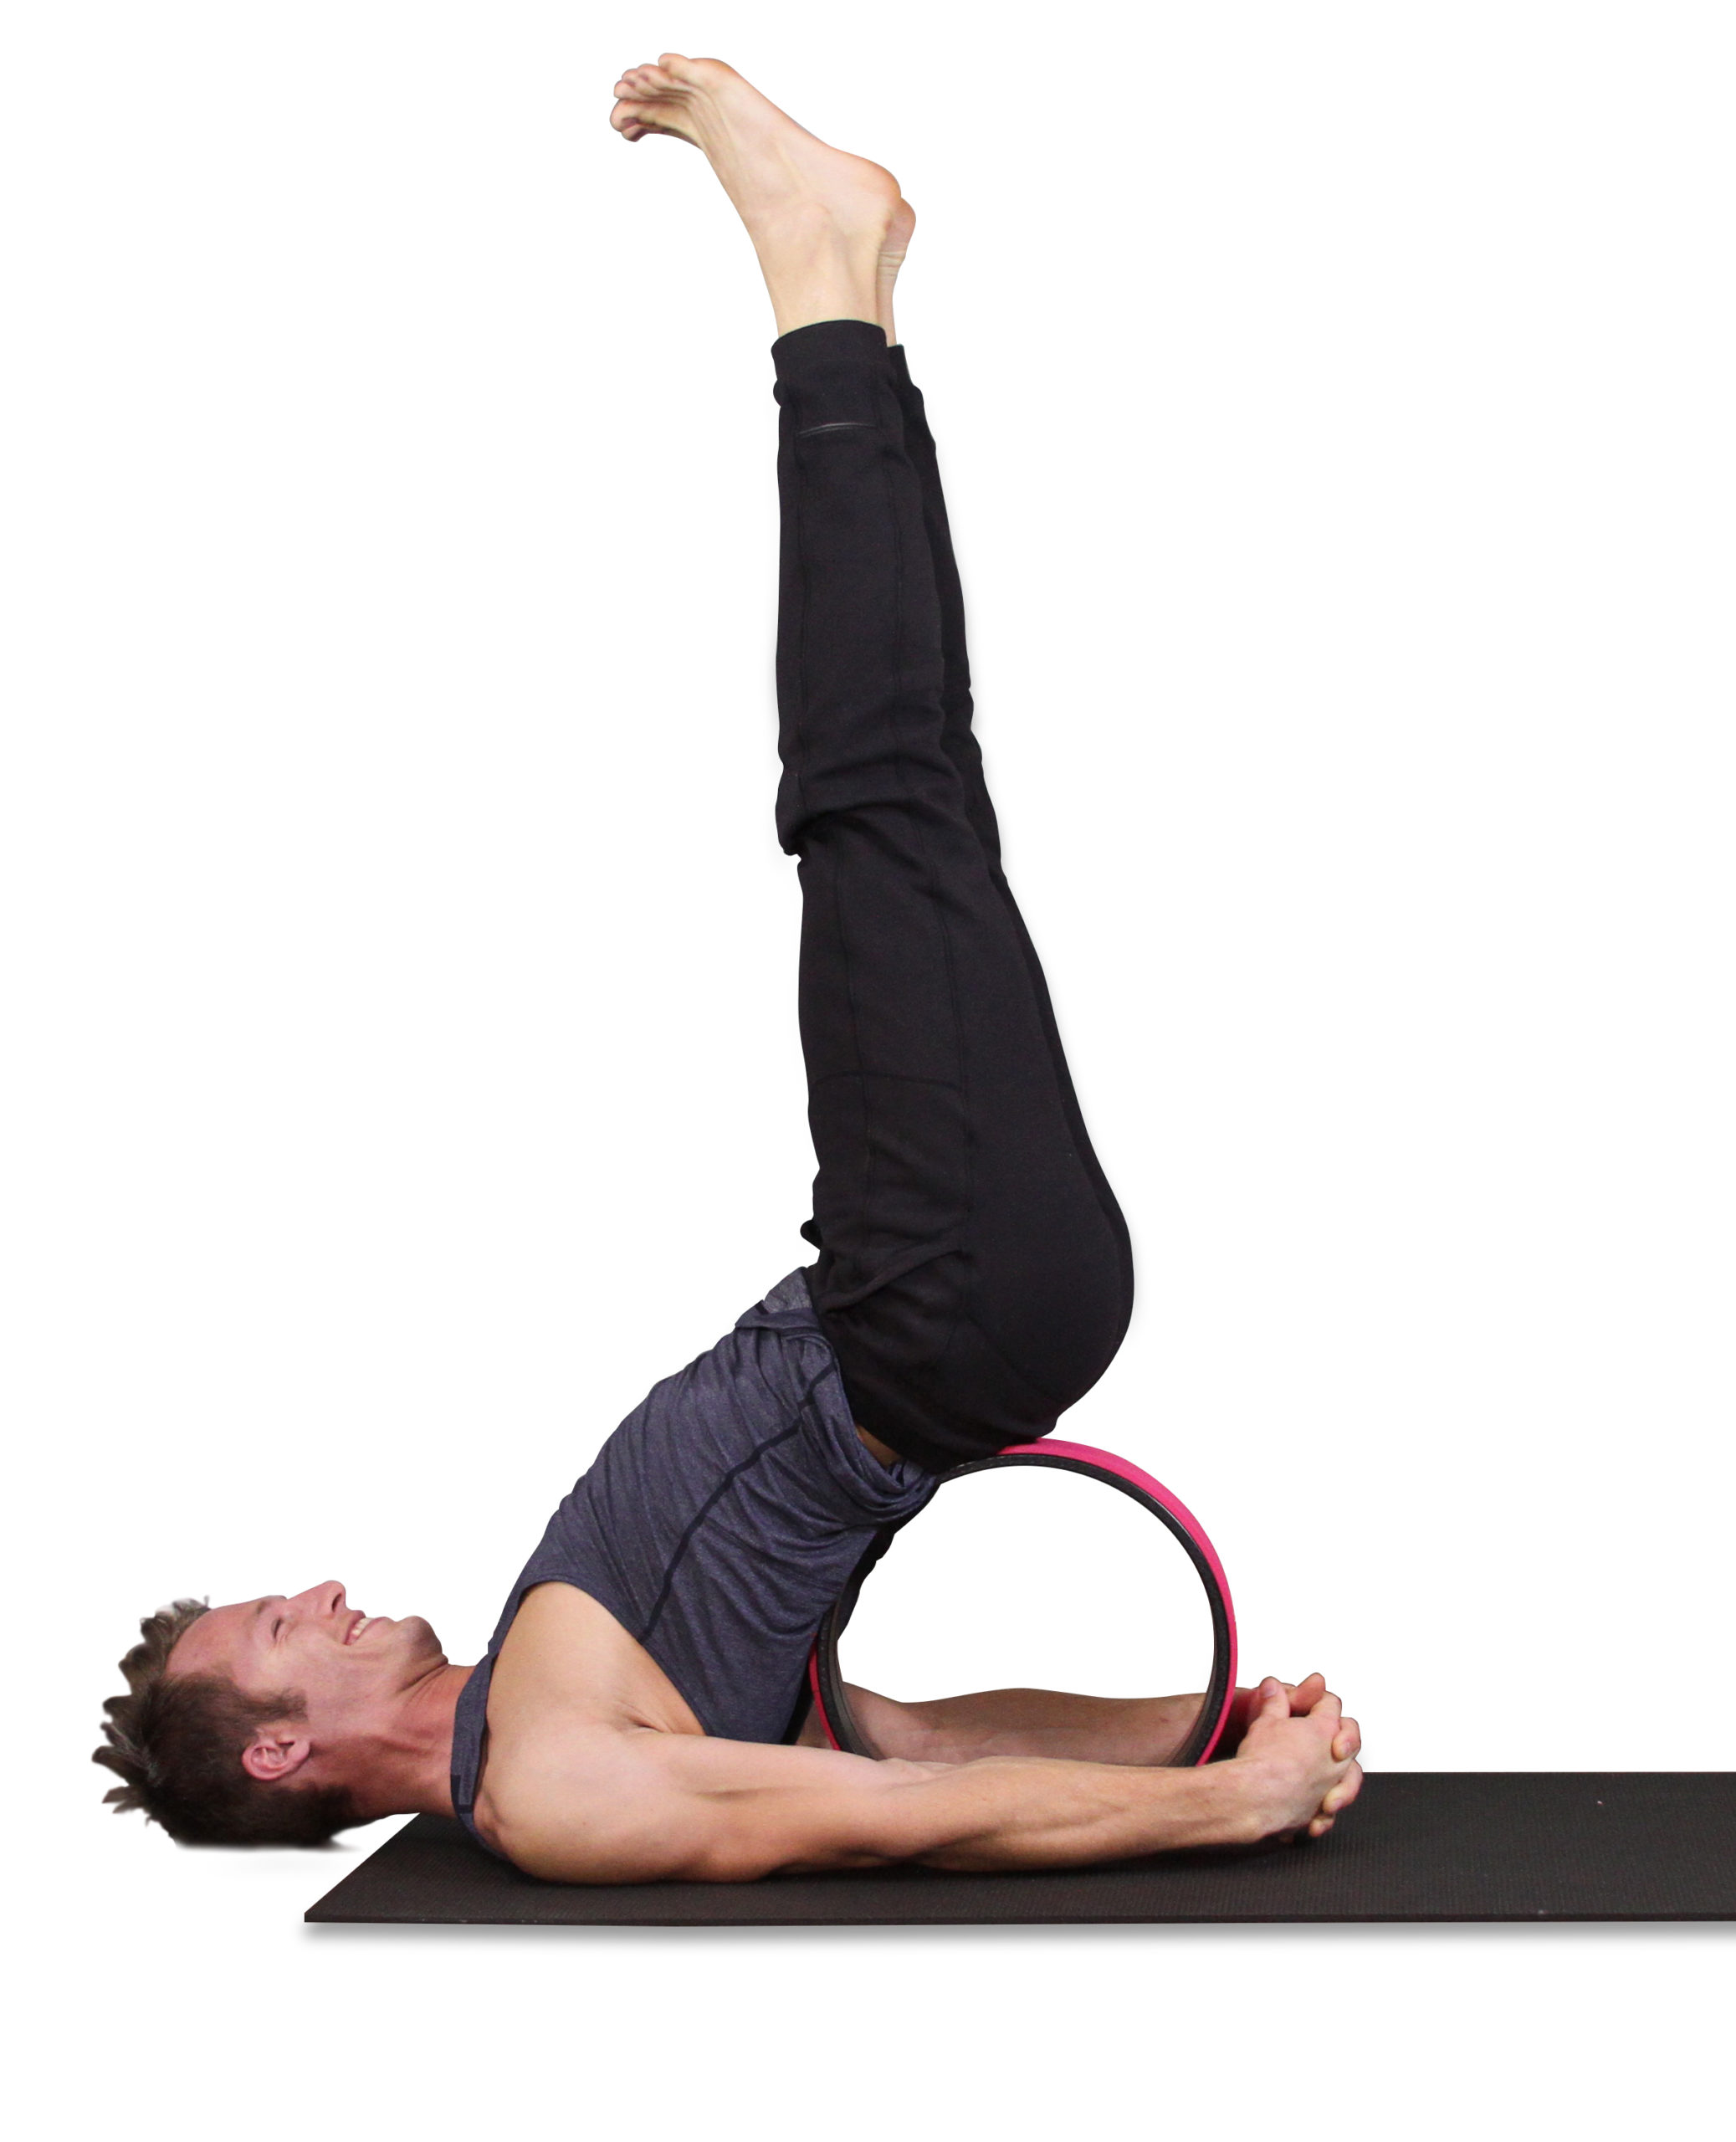 Chakrasana : How to practice wheel pose | 3 benefits